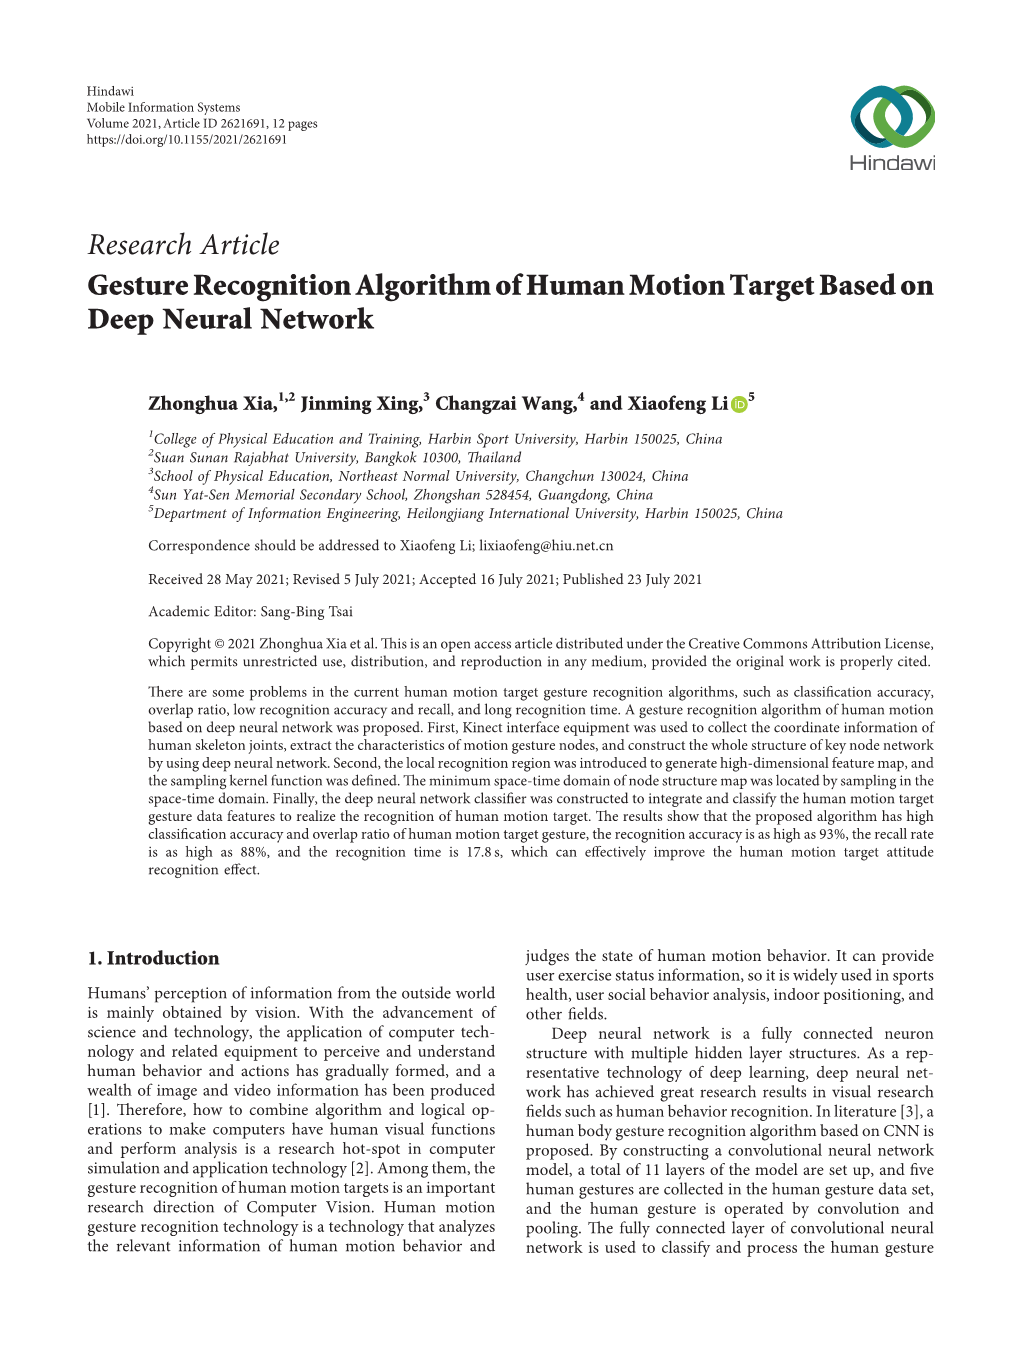 Gesture Recognition Algorithm of Human Motion Target Based on Deep Neural Network